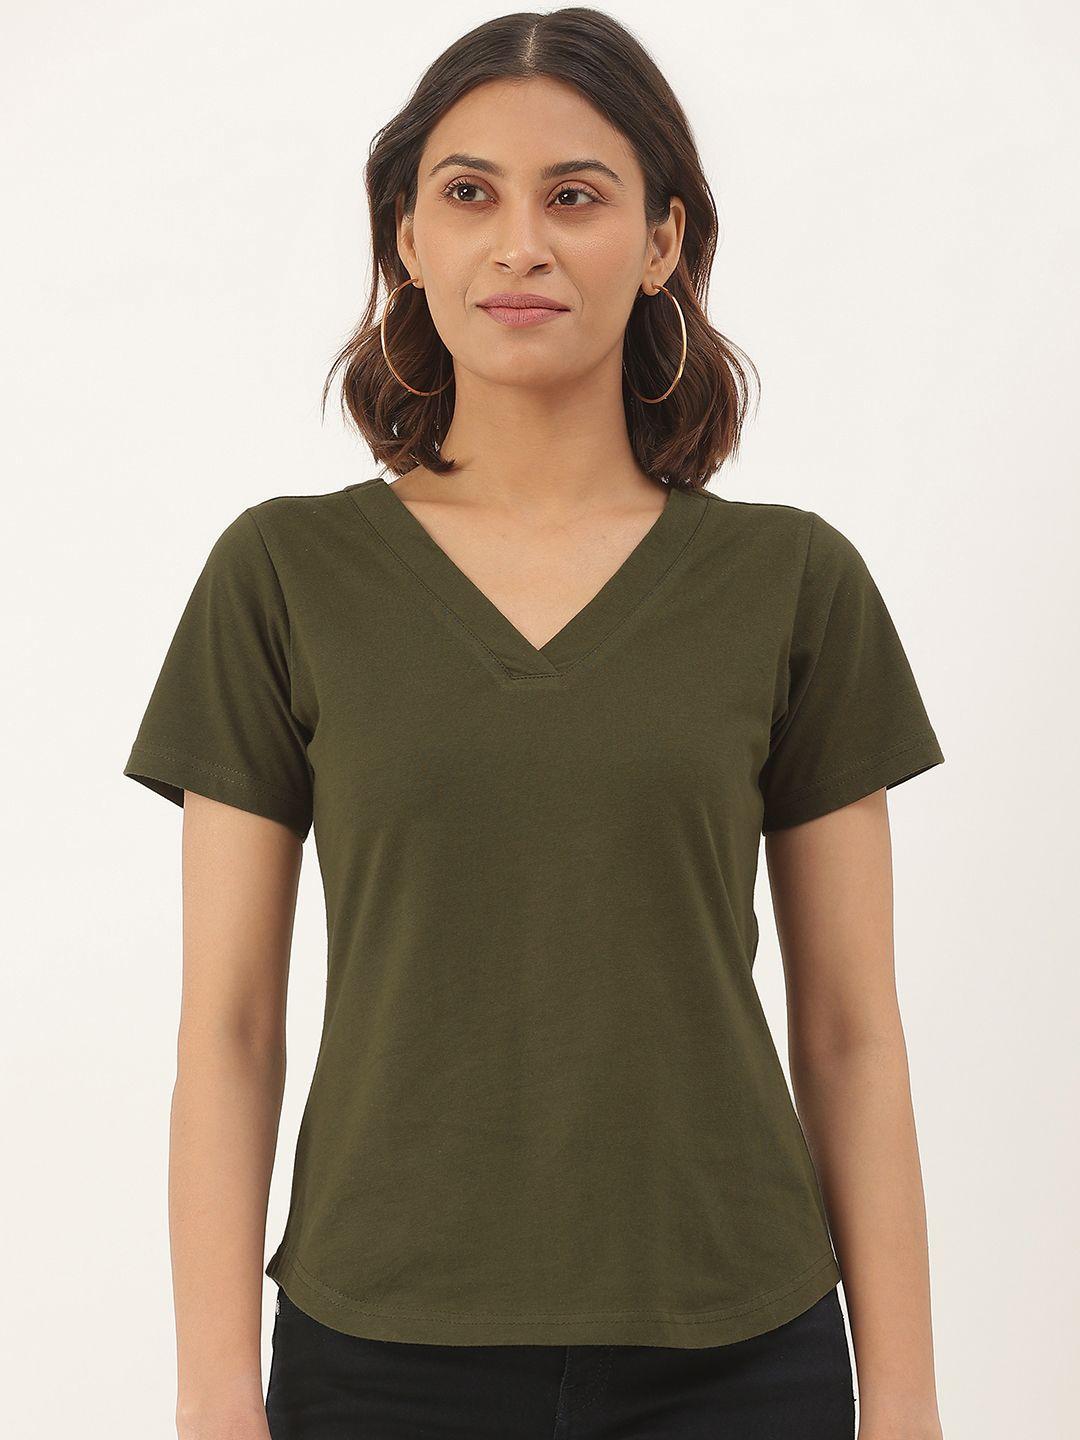 brinns women olive green v-neck cotton t-shirt